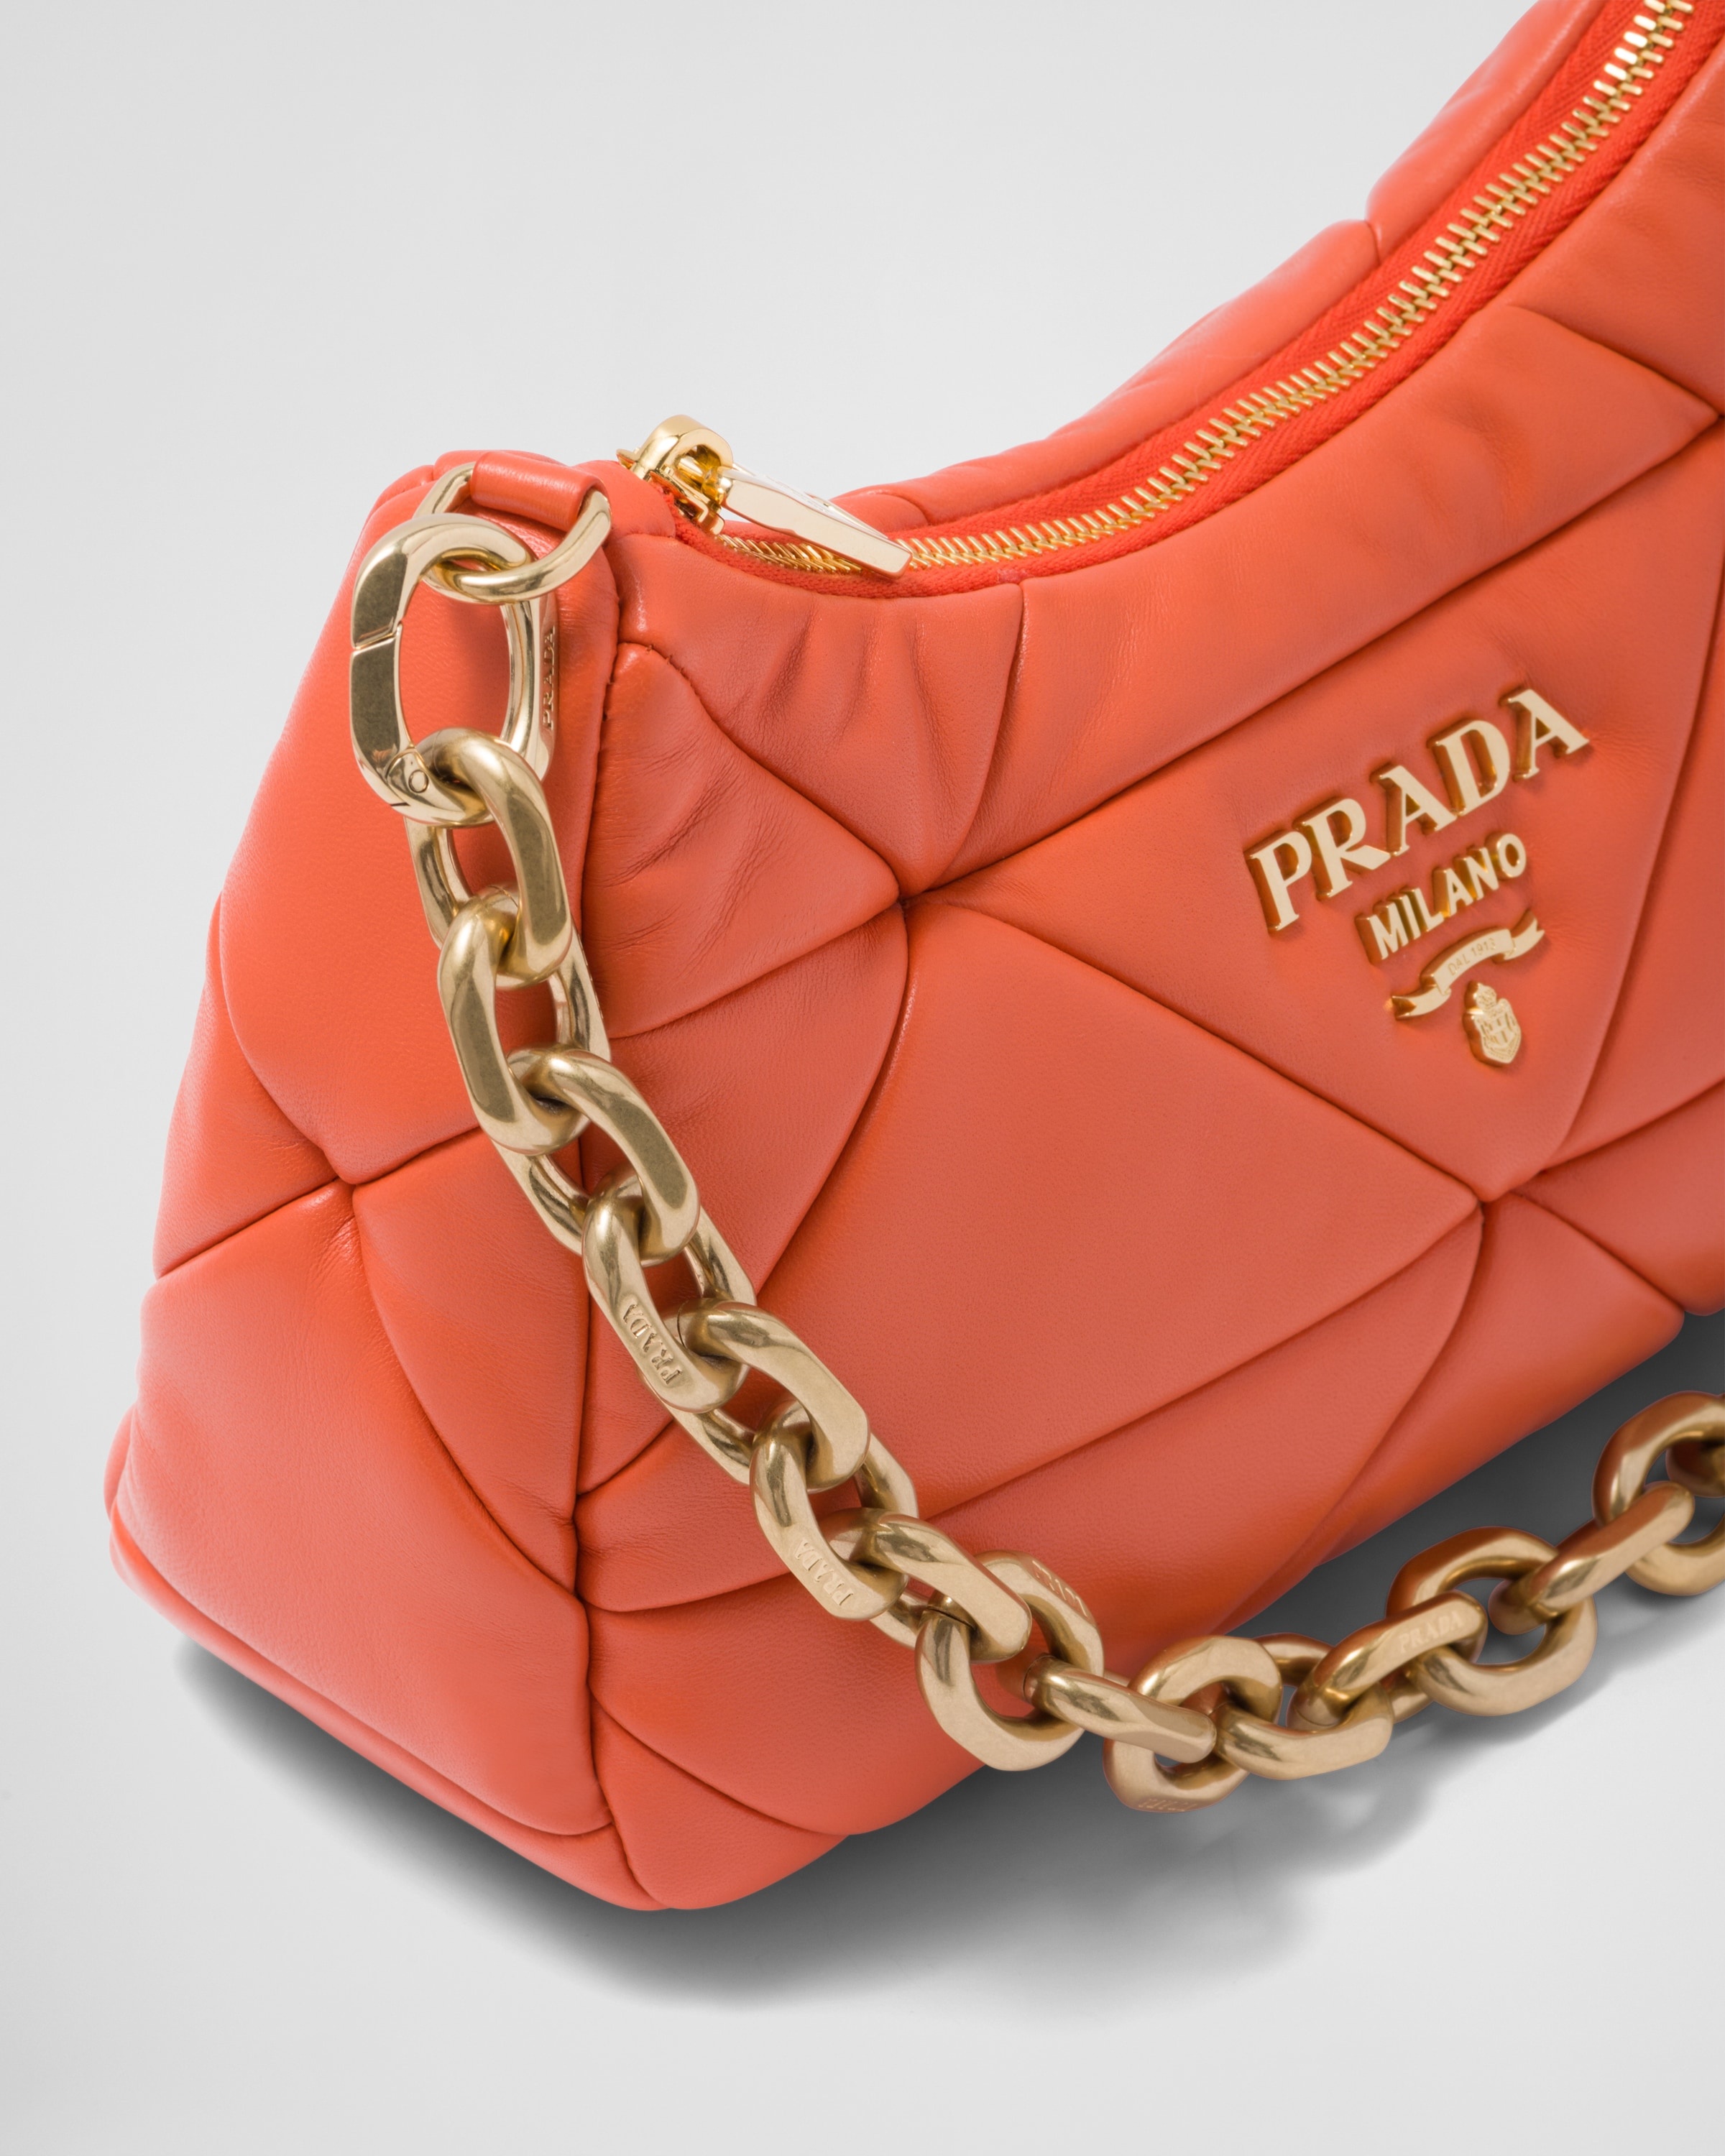 Prada Women's System Patchwork Bag